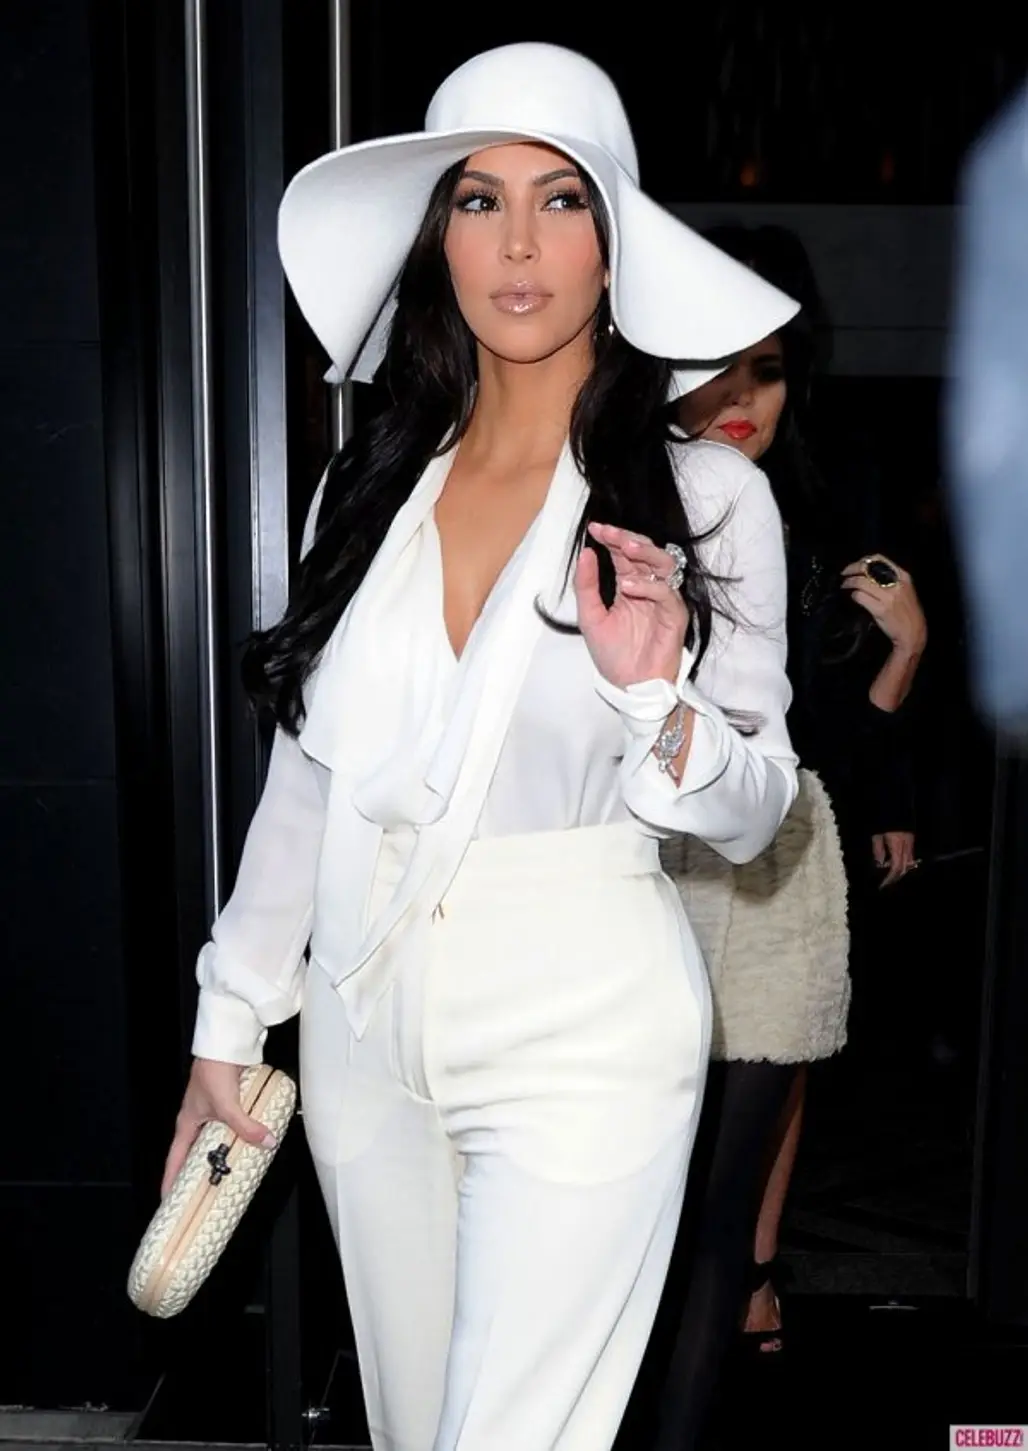 Kim Kardashian in All White 70's Inspired Look